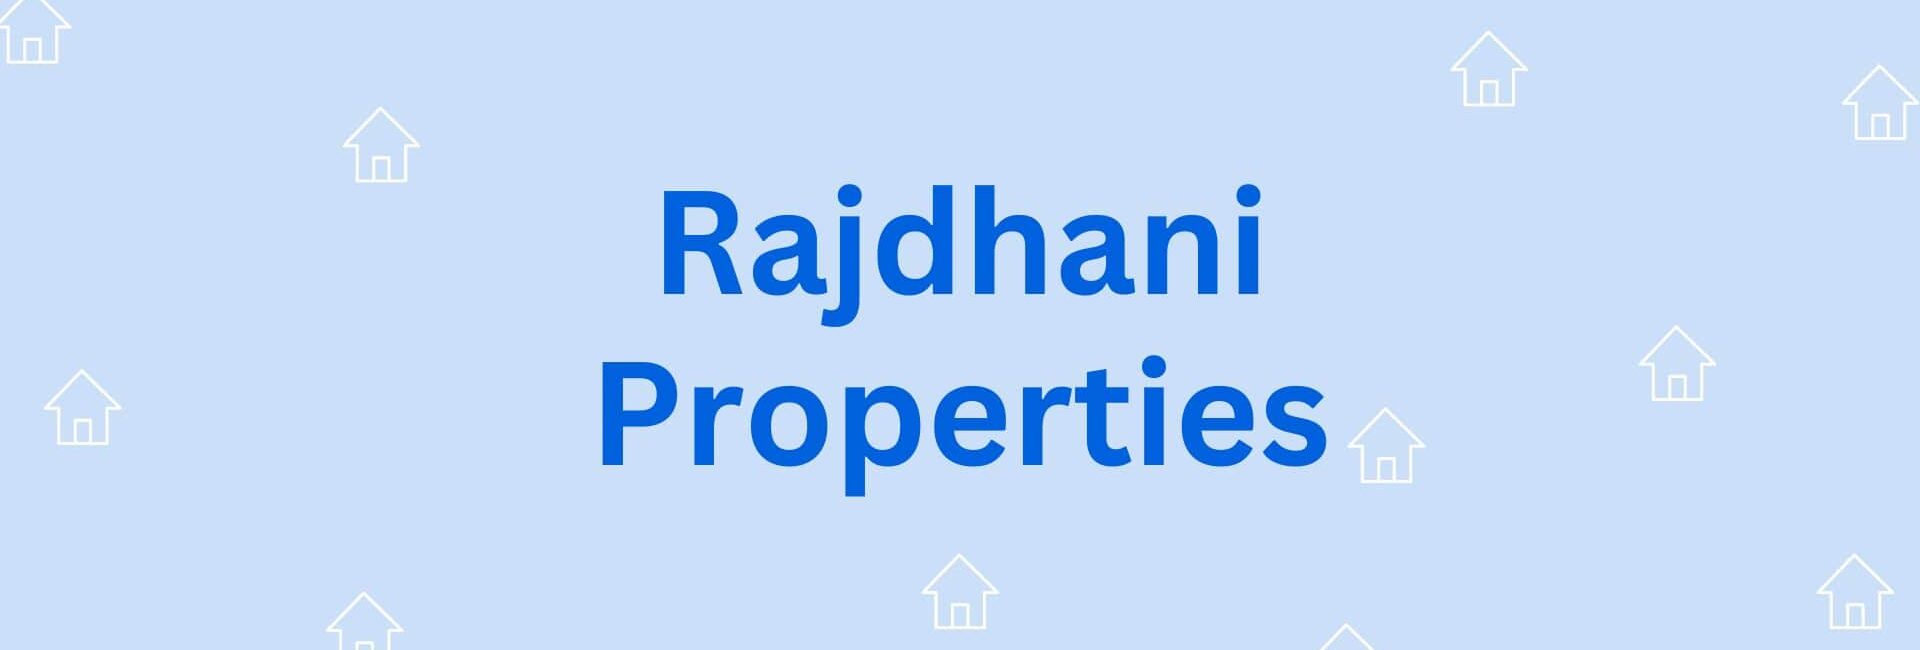 Rajdhani Properties - Estate Agent in Hisar sector 14